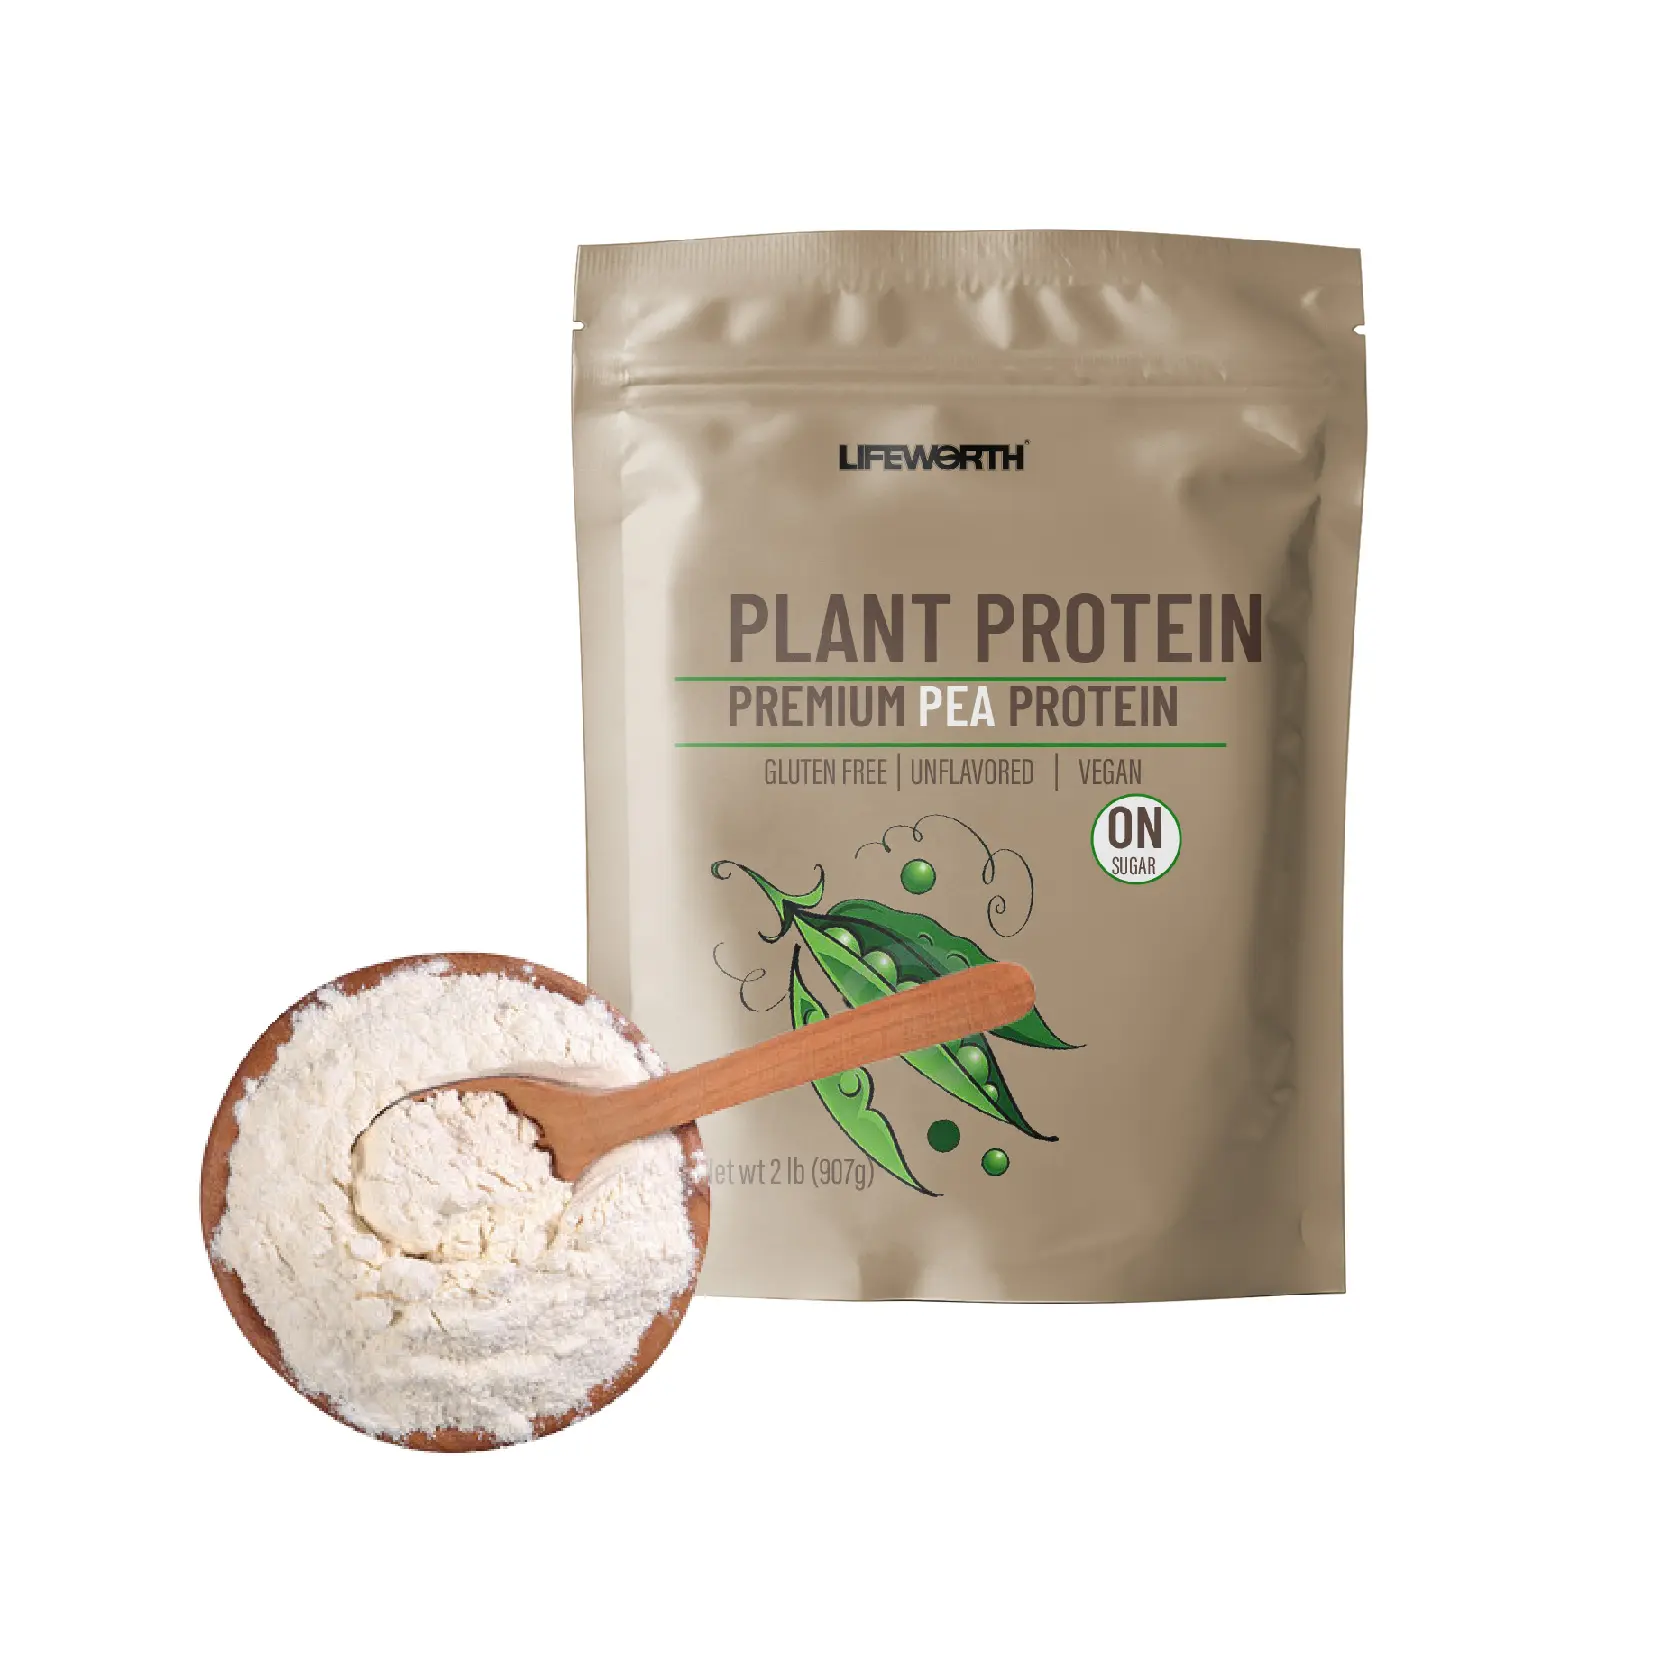 Lifeworth ลดน้ําหนัก ช็อคโกแลต เนยถั่วลิสง กลิ่นควินัว เมล็ดถั่วโปรตีนแยกจากพืช ผงโปรตีนมังสวิรัติ